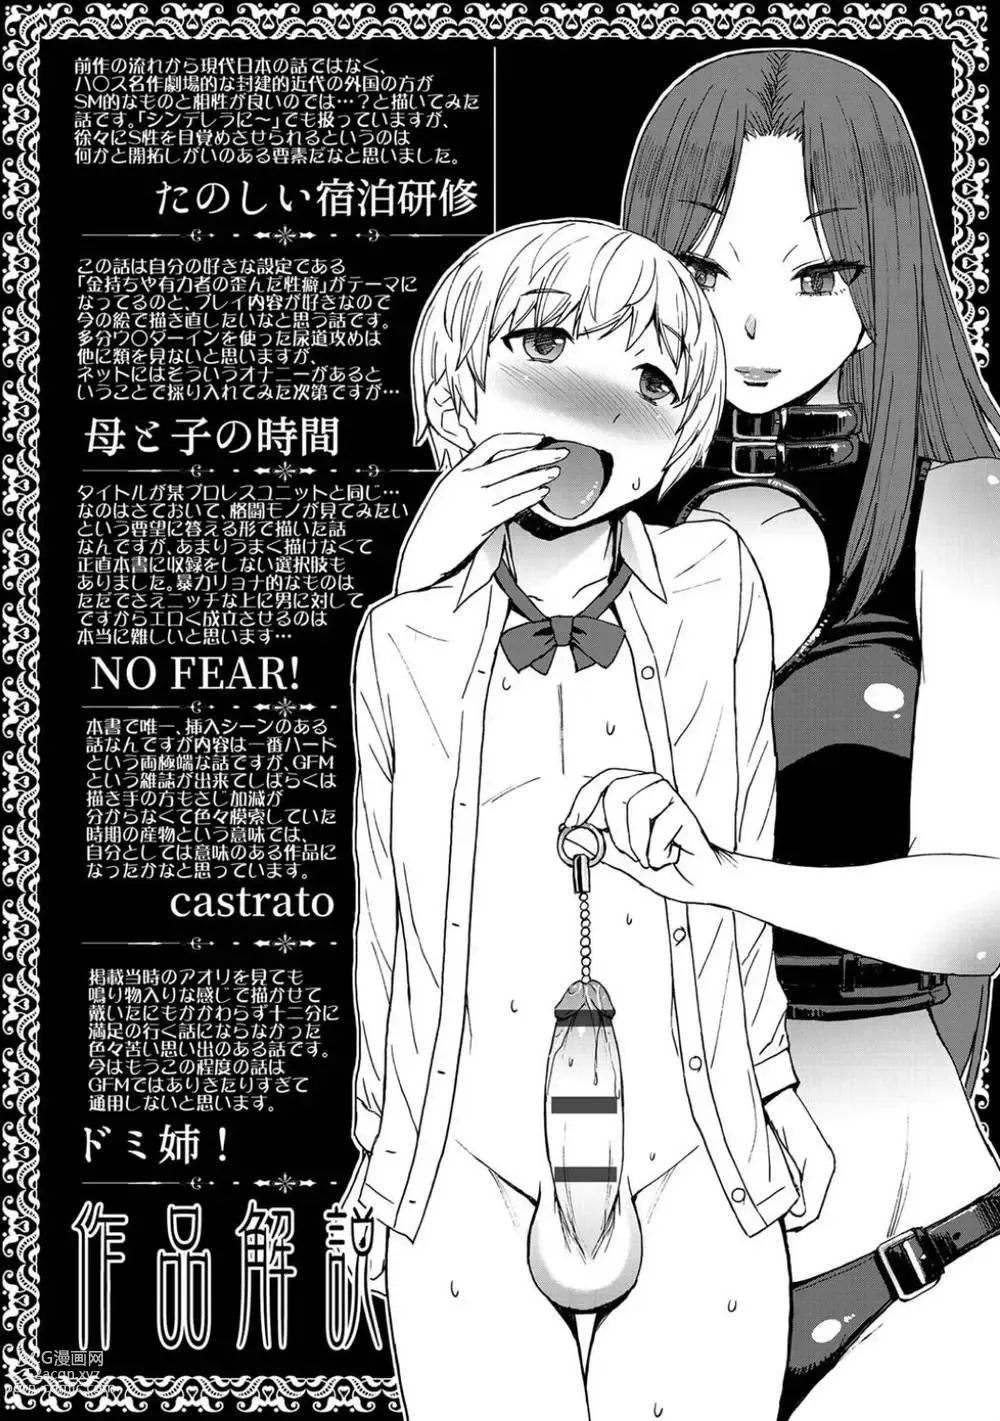 Page 264 of manga Aisarete Miru?